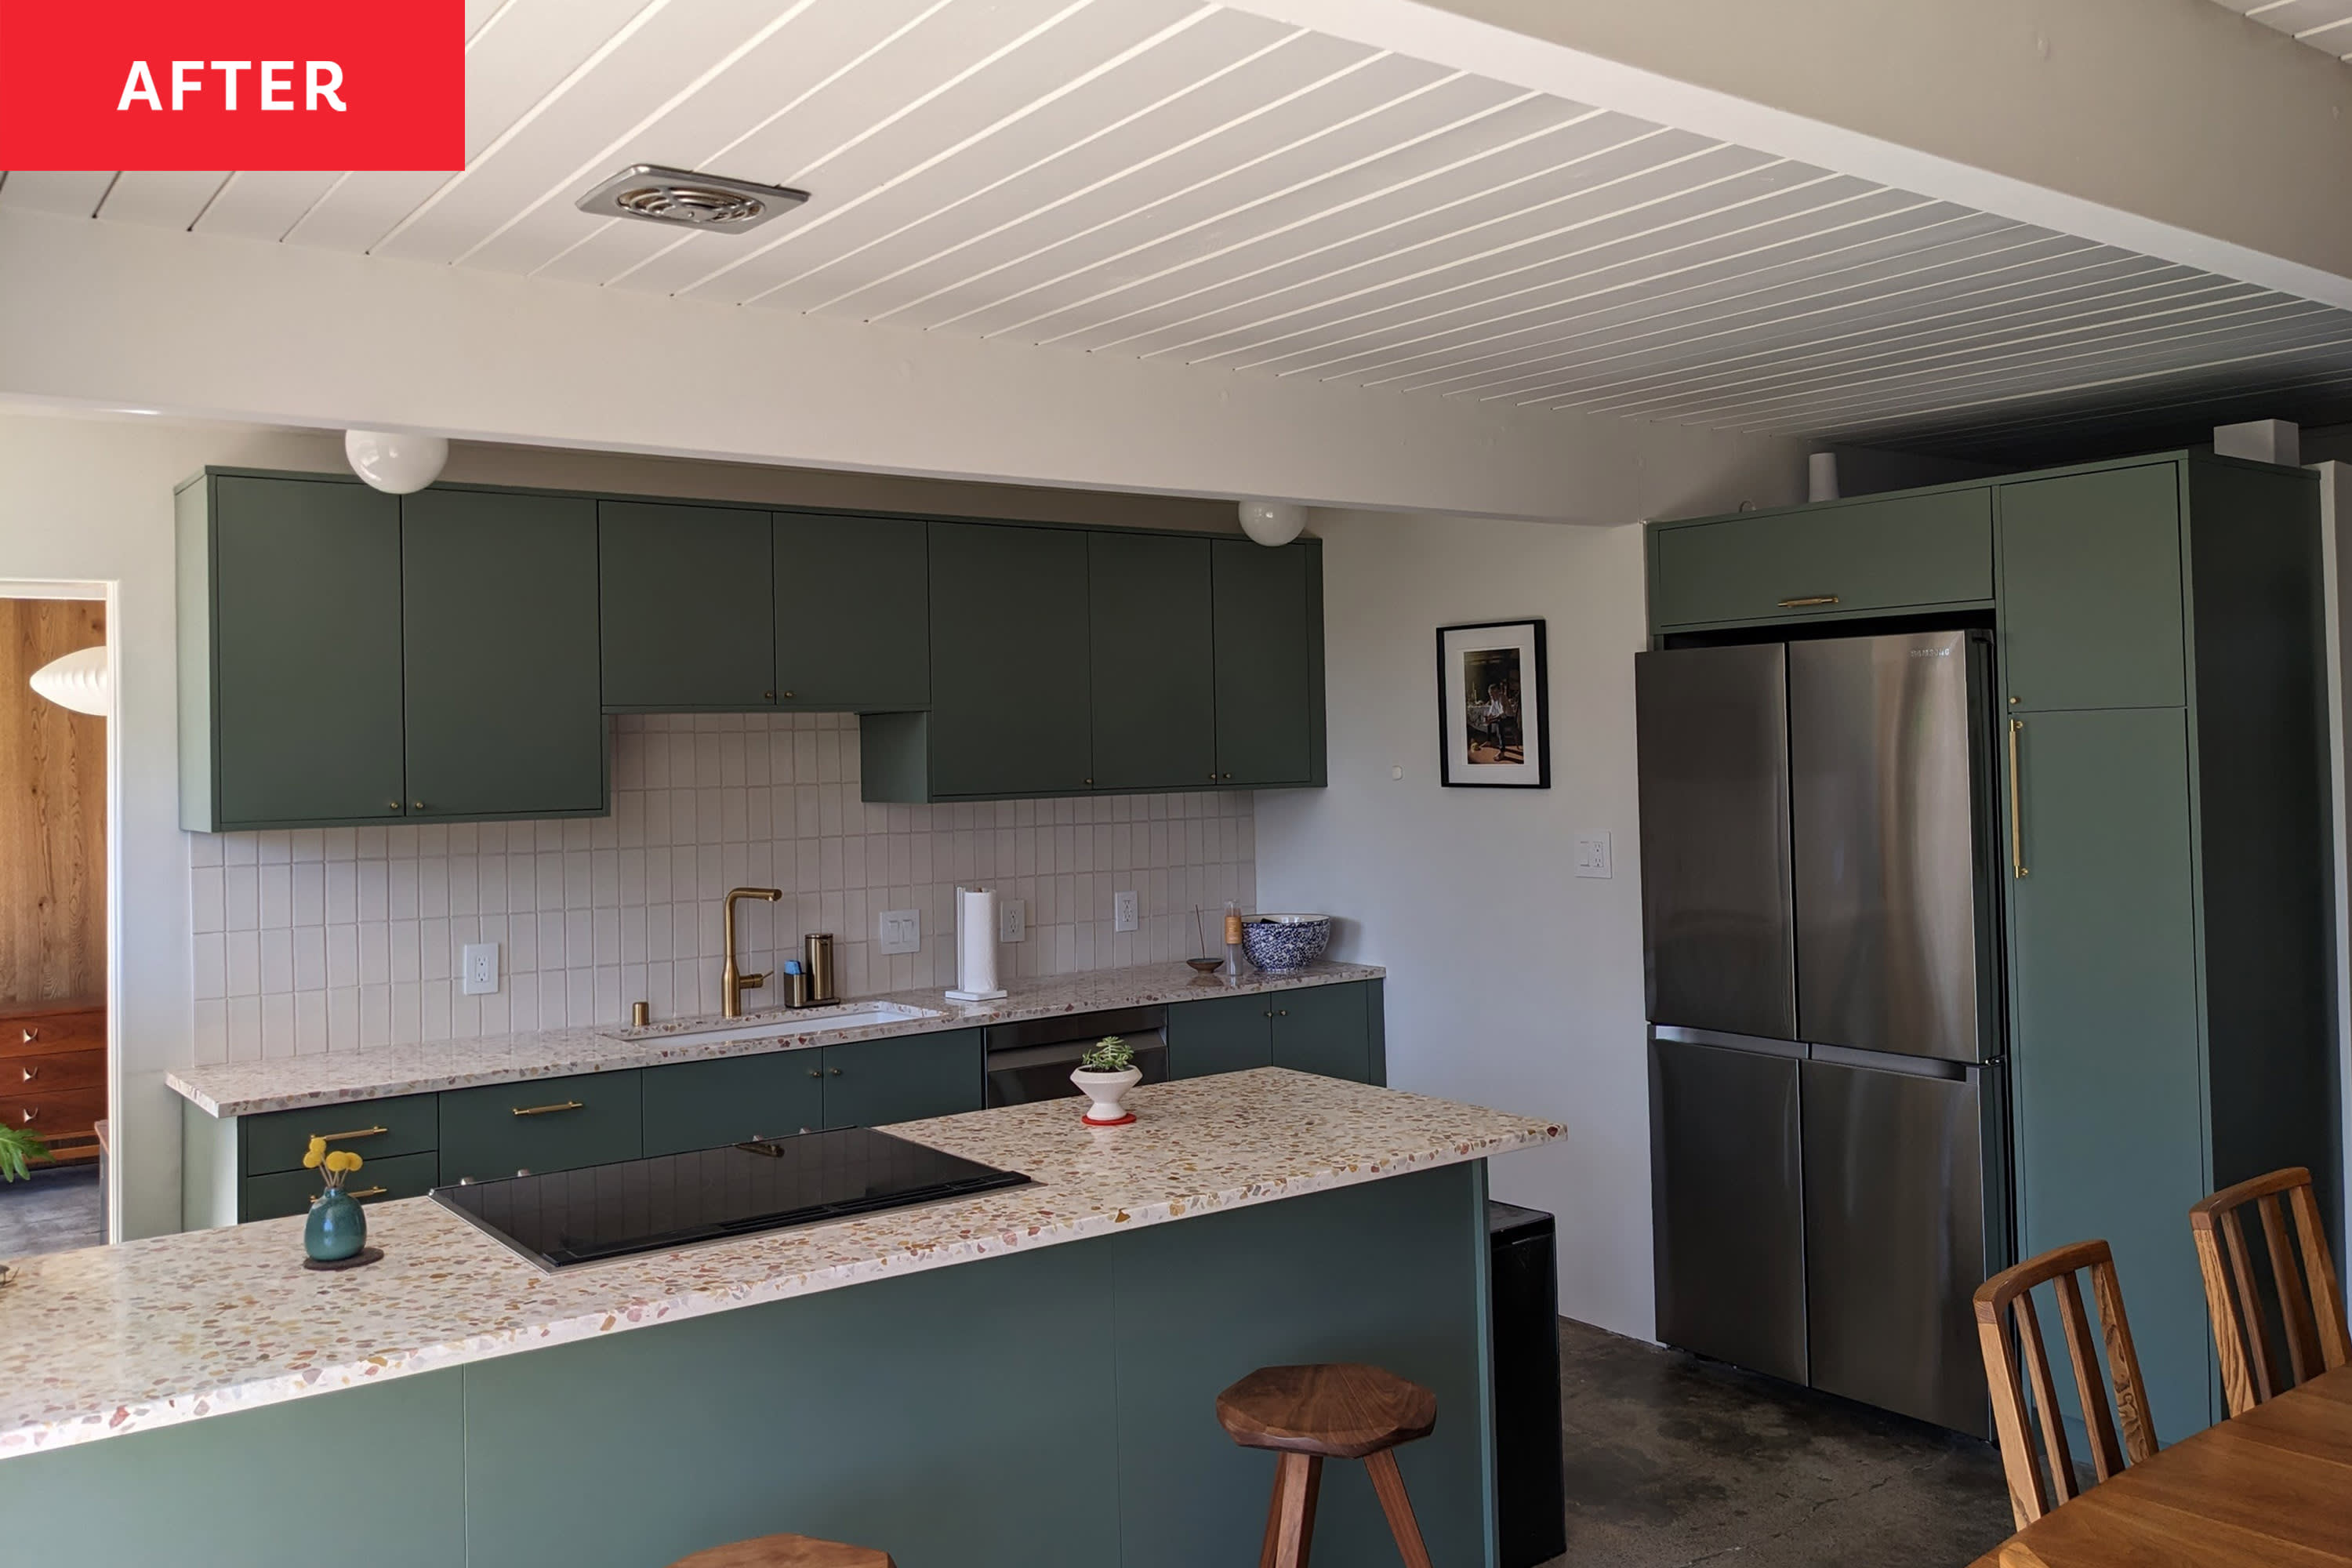 Our Teal Kitchen Remodel • Fit Mitten Kitchen